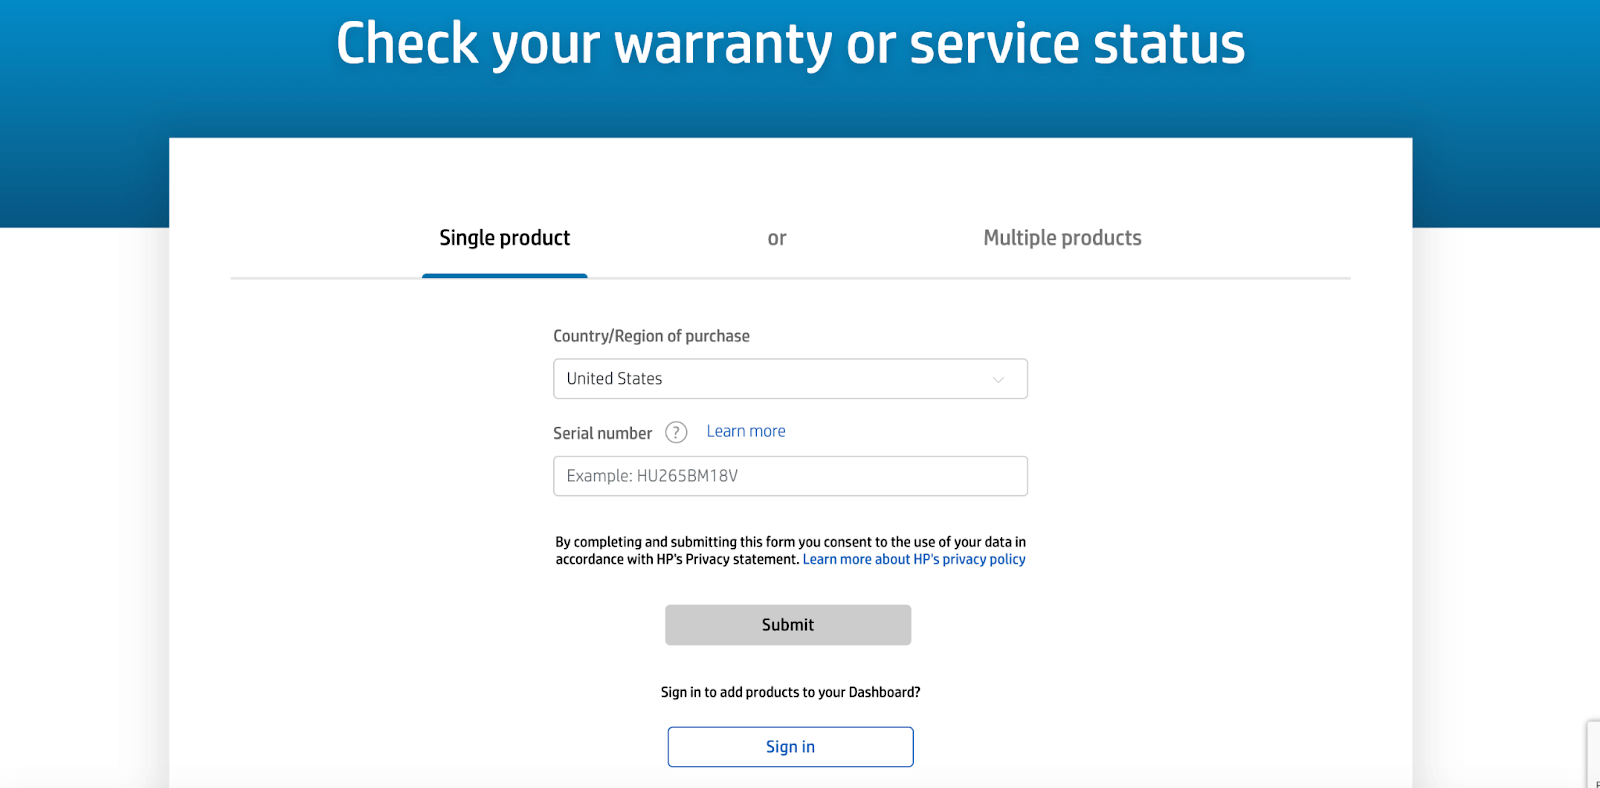 Check warranty or service status form